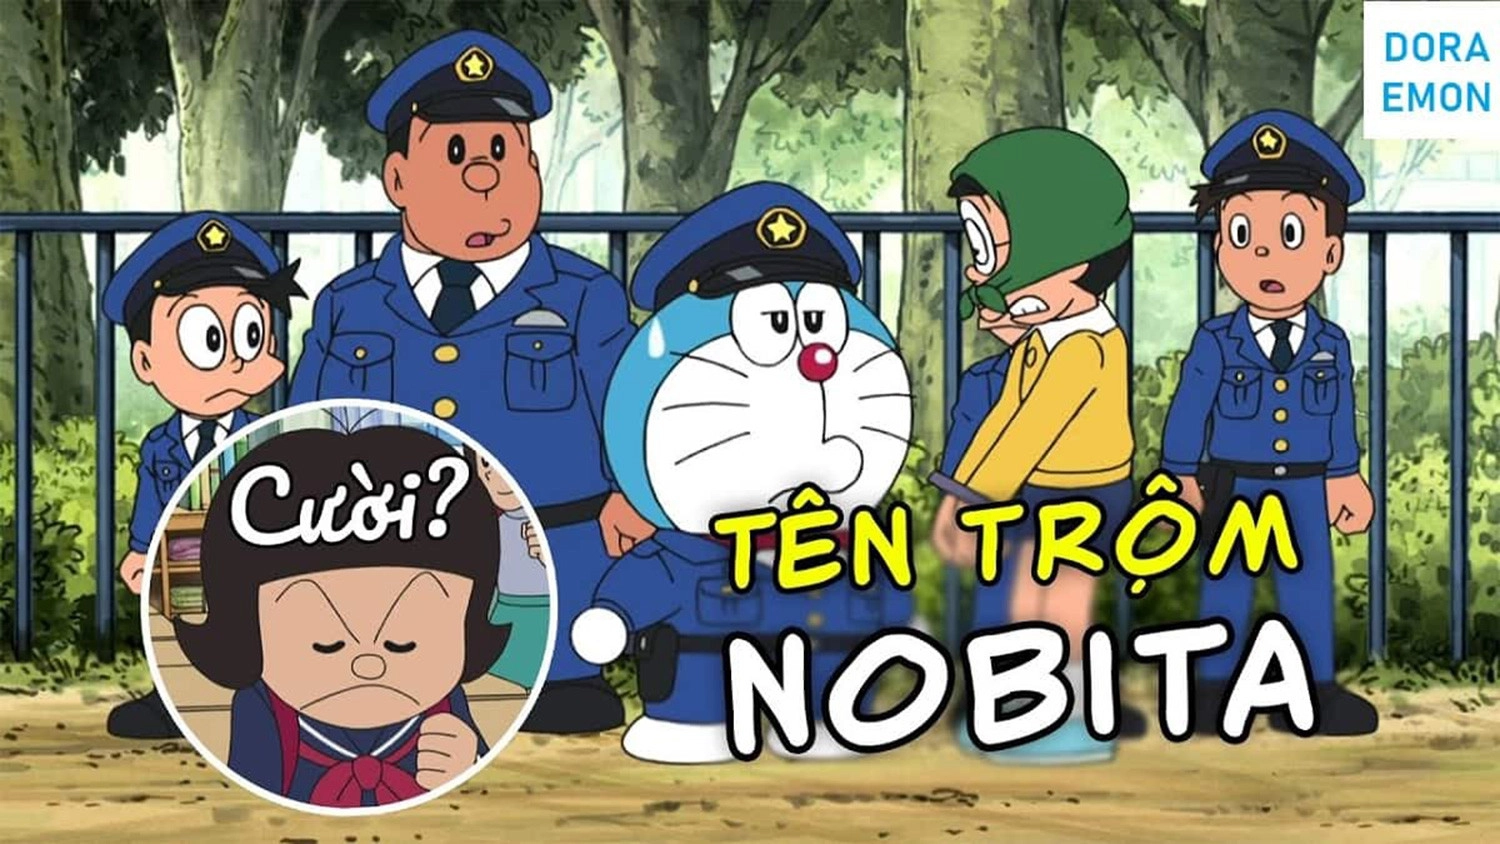 Phim Doraemon bắt lưu giữ thương hiệu trộm Nobita